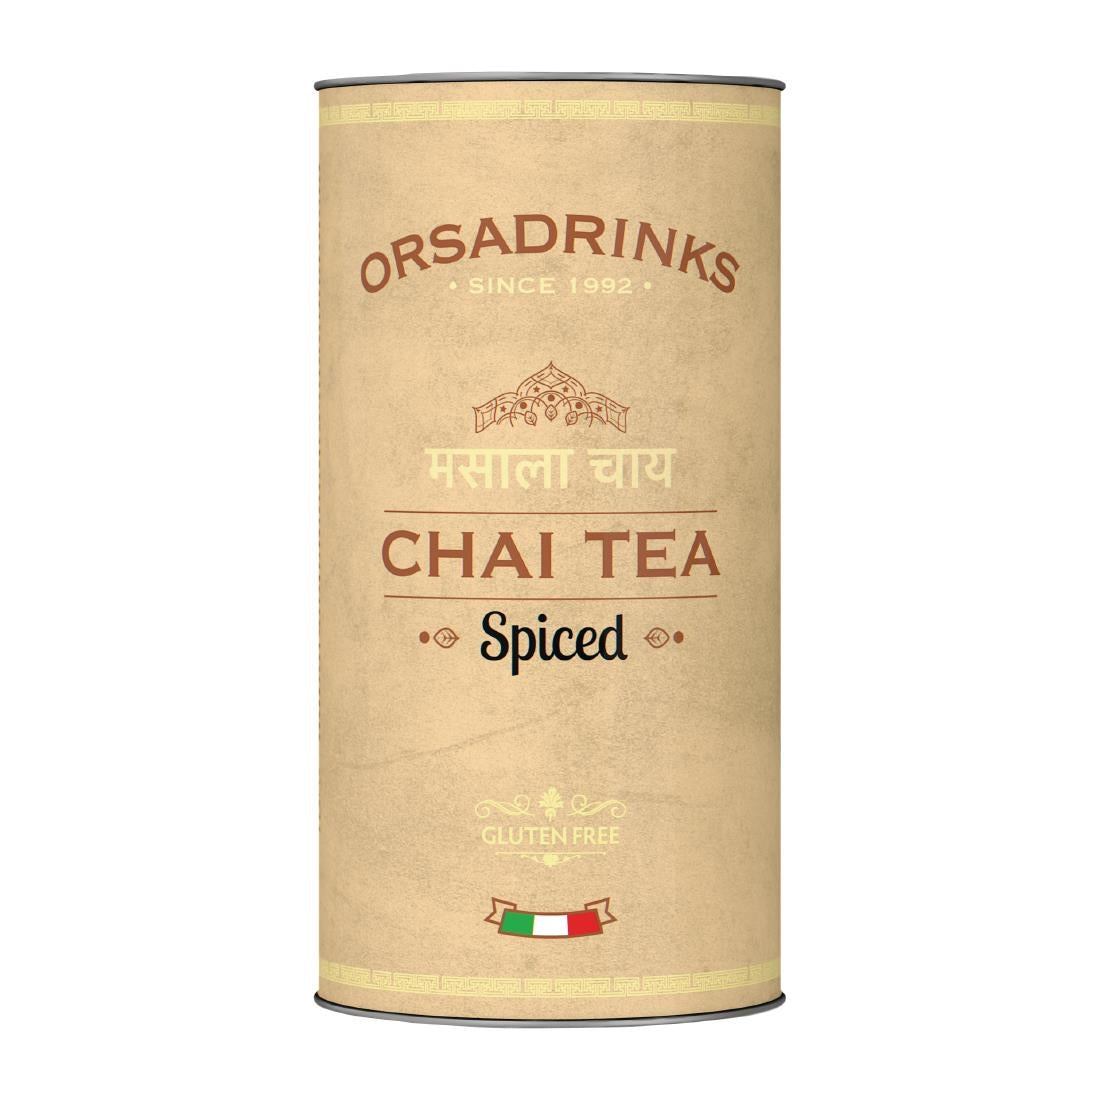 FX031 ODK Chai Tea Spiced Powder 1kg JD Catering Equipment Solutions Ltd